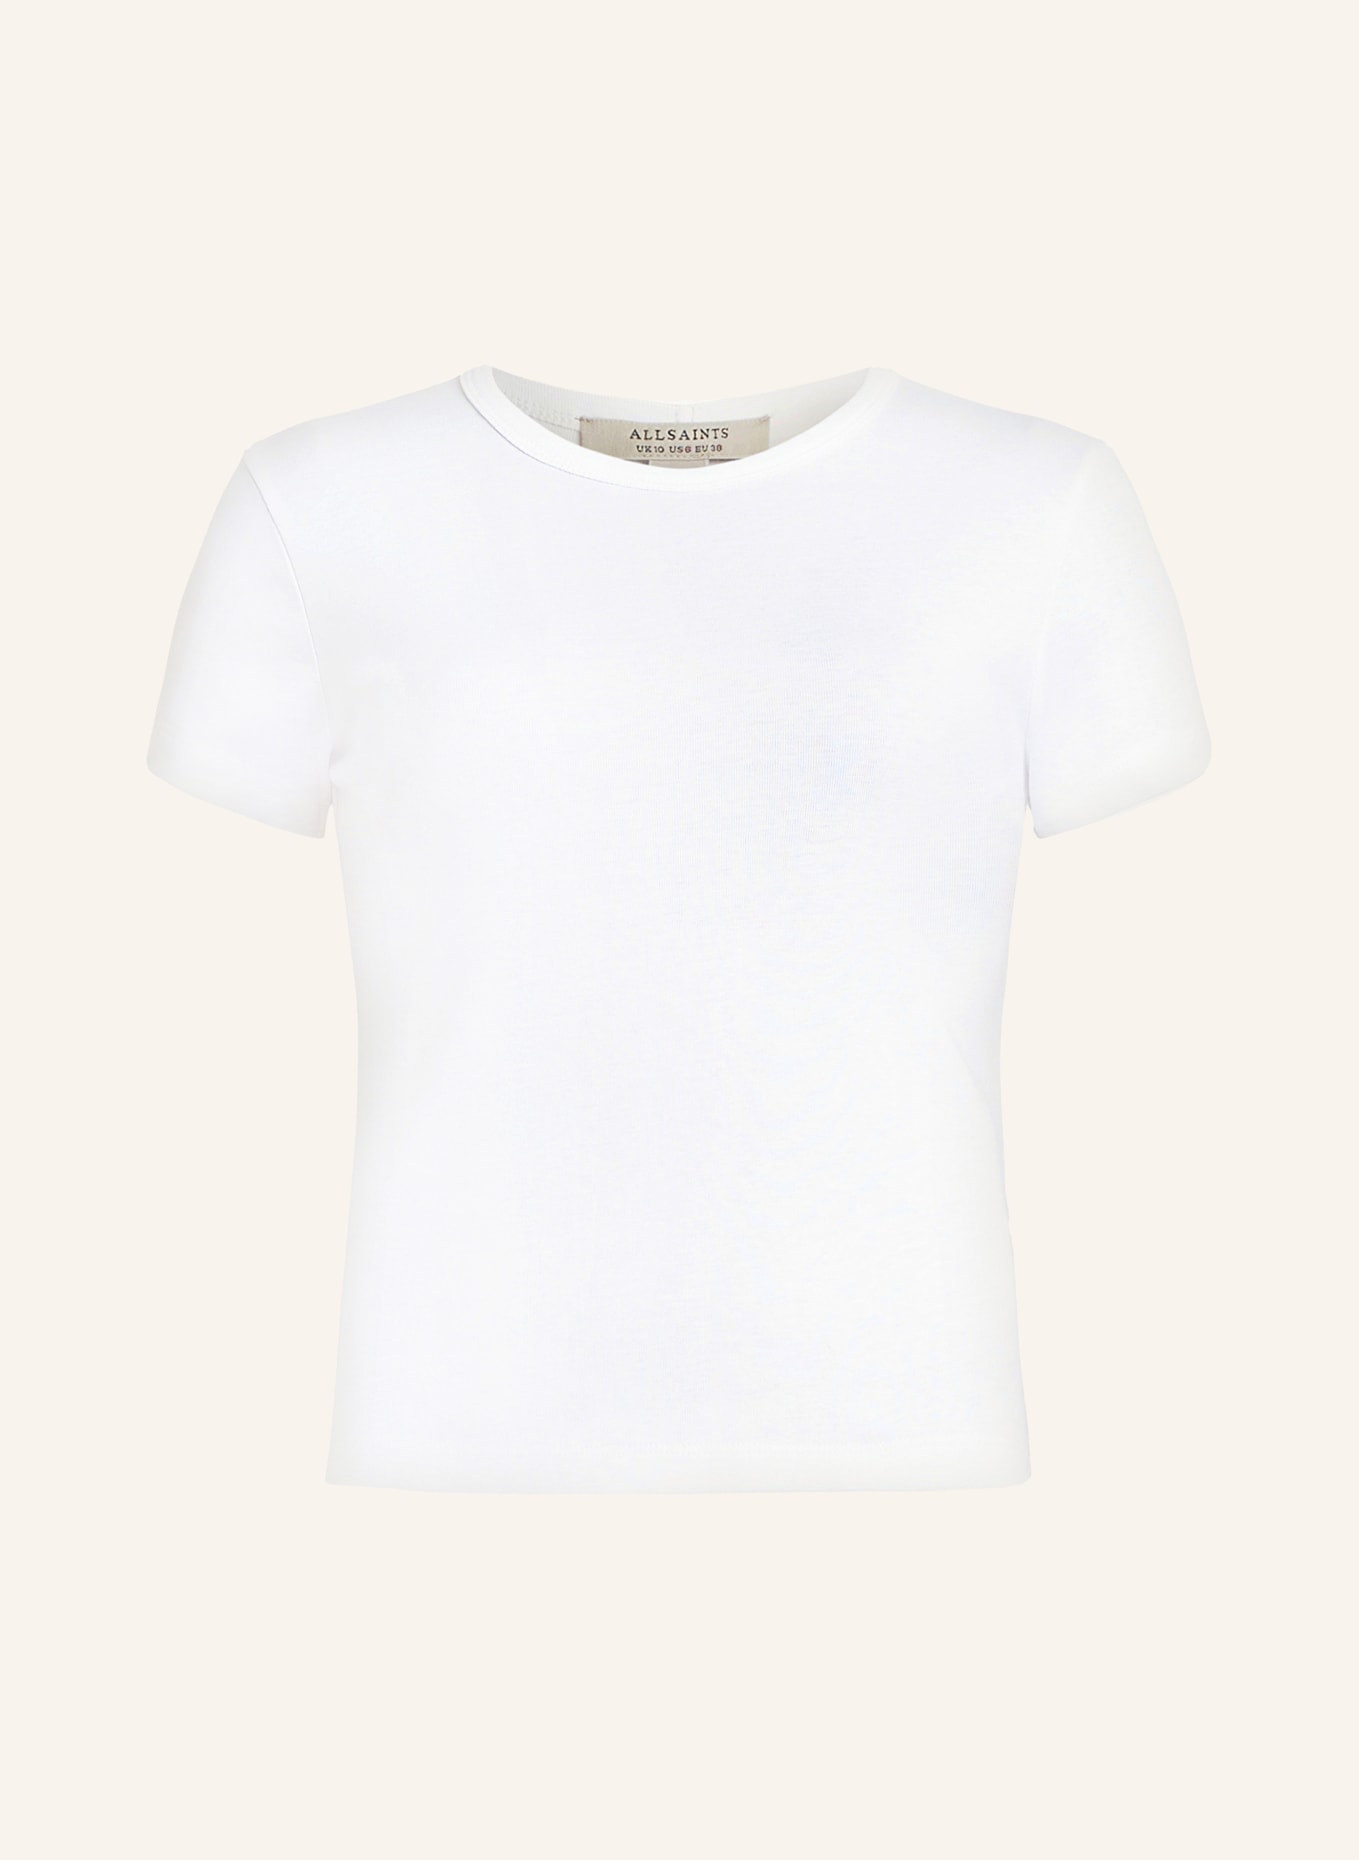 ALLSAINTS T-Shirt STEVIE, Farbe: WEISS (Bild 1)